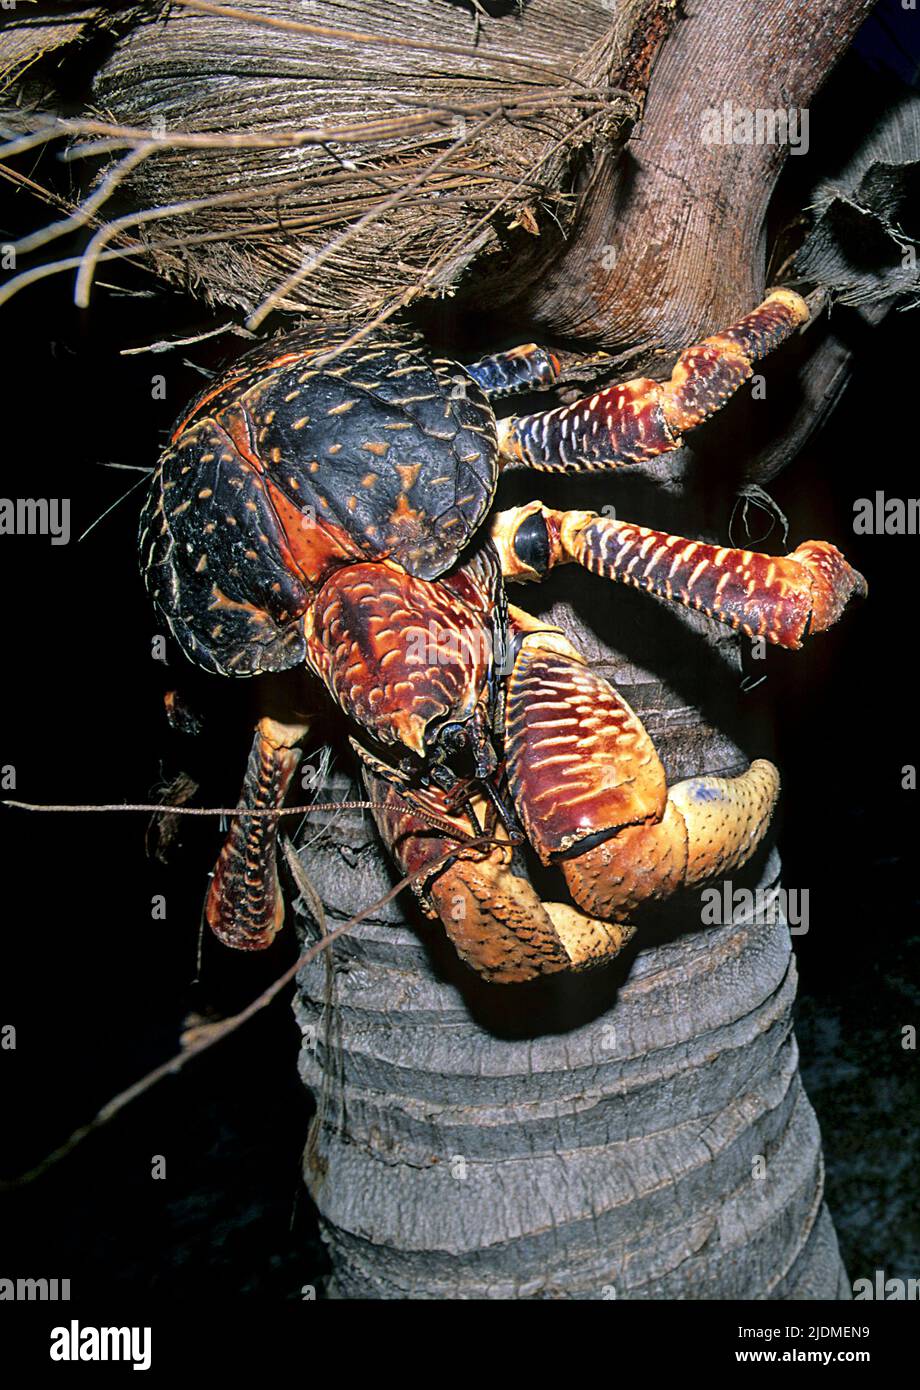 Coconut crab (Birgus latro) on a coconut palm tree, Aldabra Atoll, Seychelles, Indic ocean Stock Photo